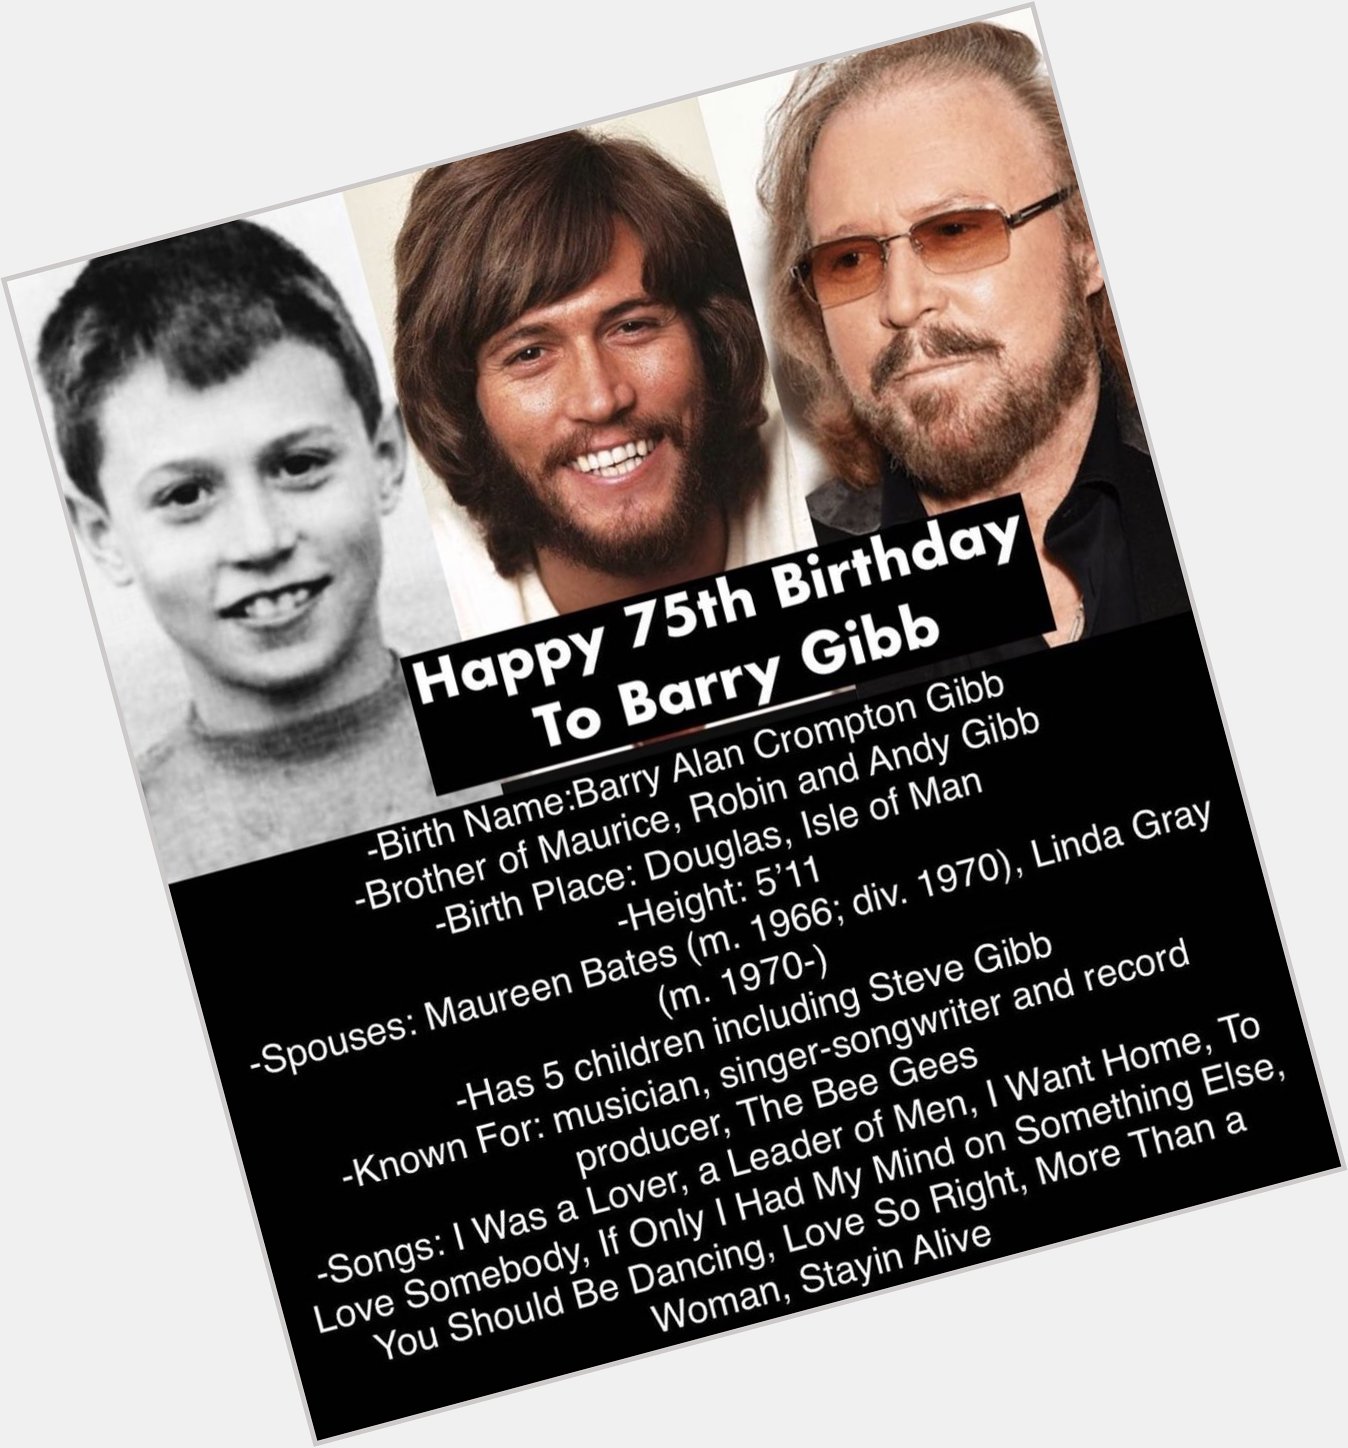 Happy Birthday, Barry Gibb of the 